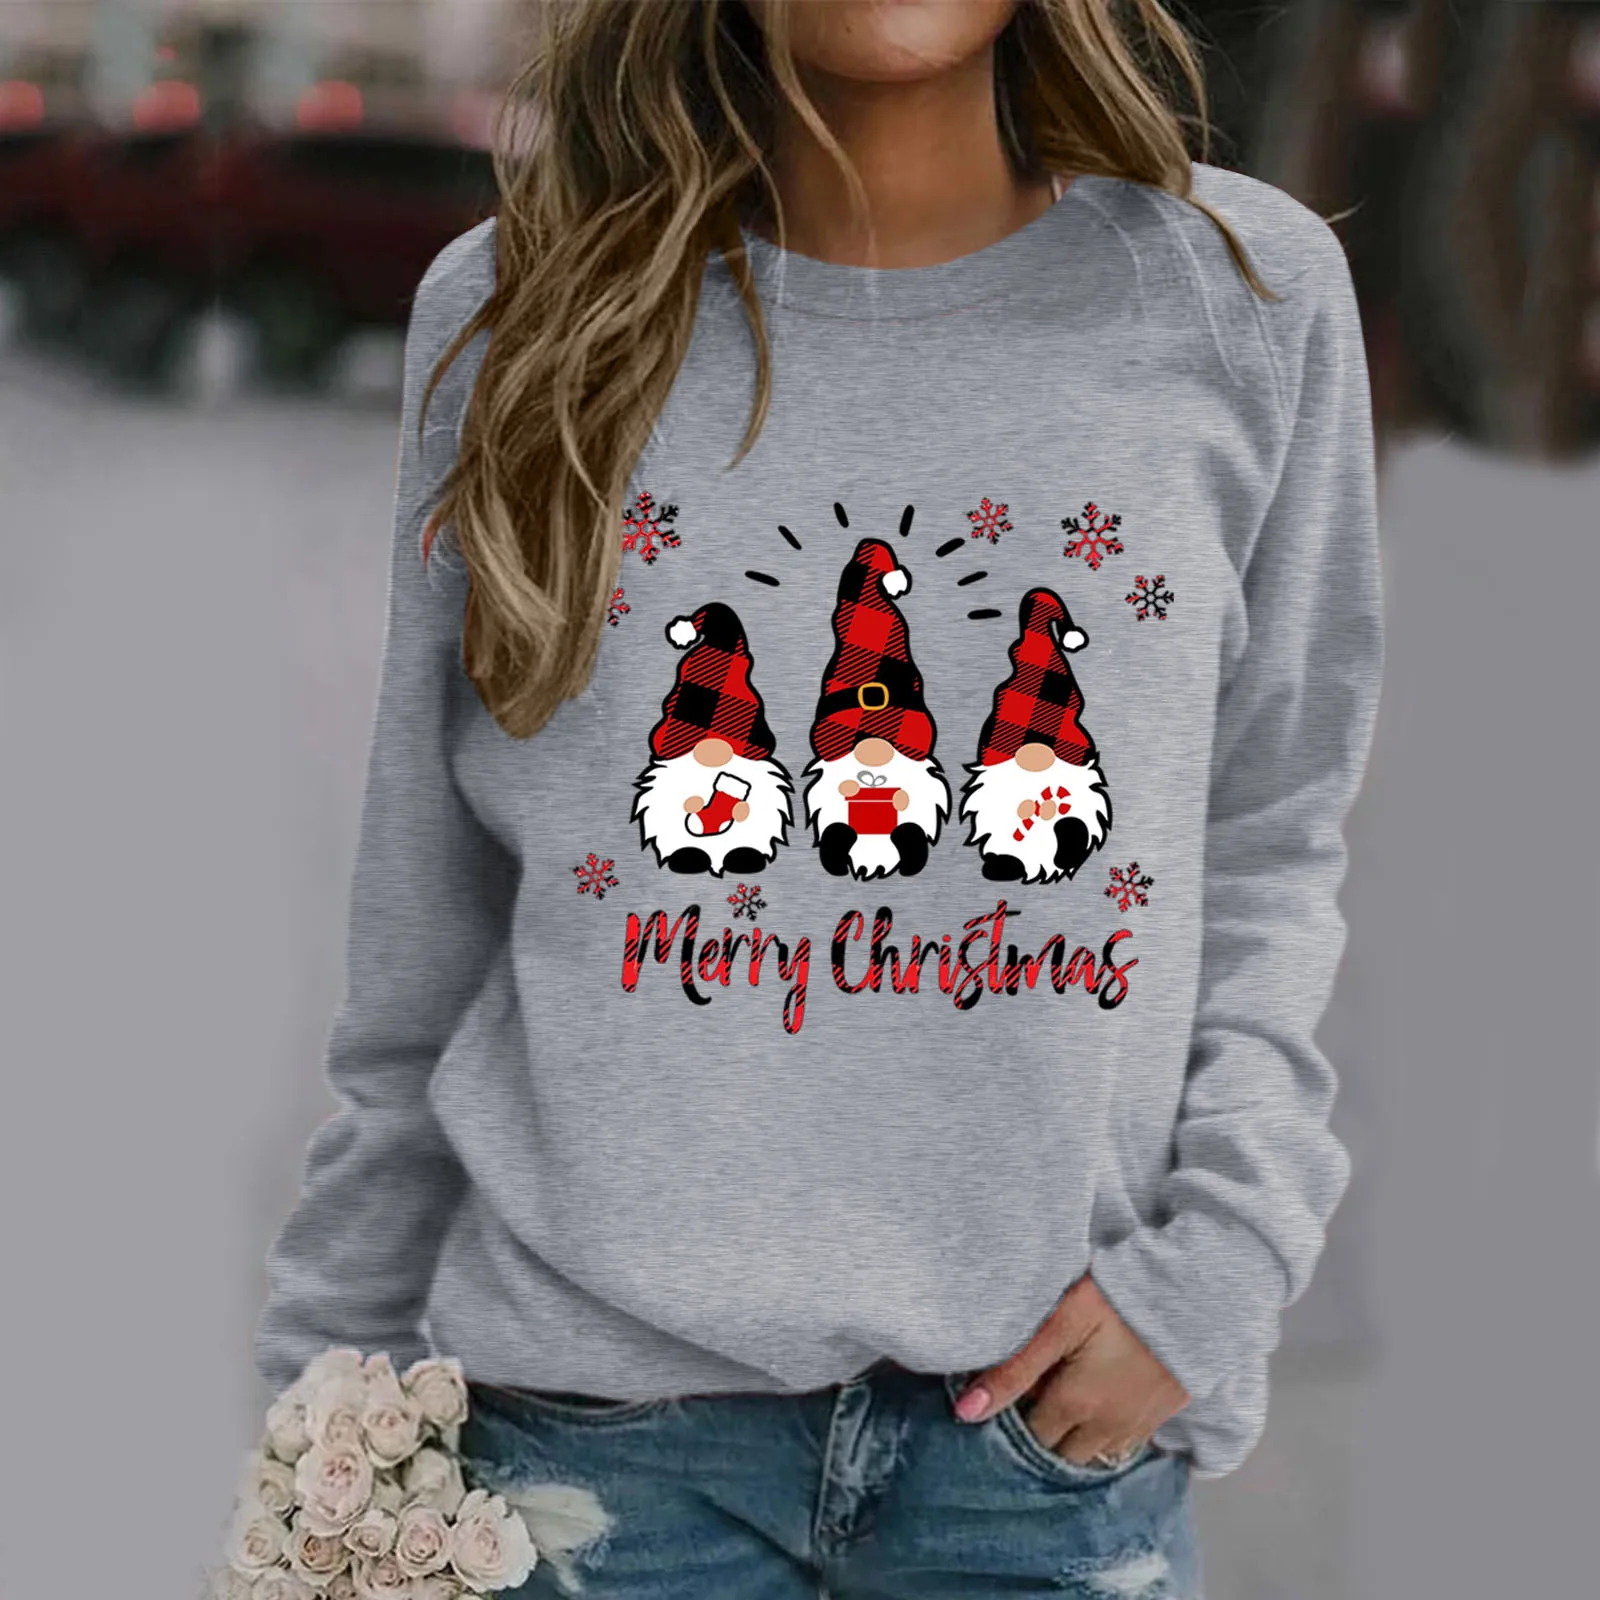 Christmas Hoodies Winter Womens Sweater Vantage O Neck Hooded Shirt Classic Printed Long-Sleeved Sweatshirt Solid Color Top